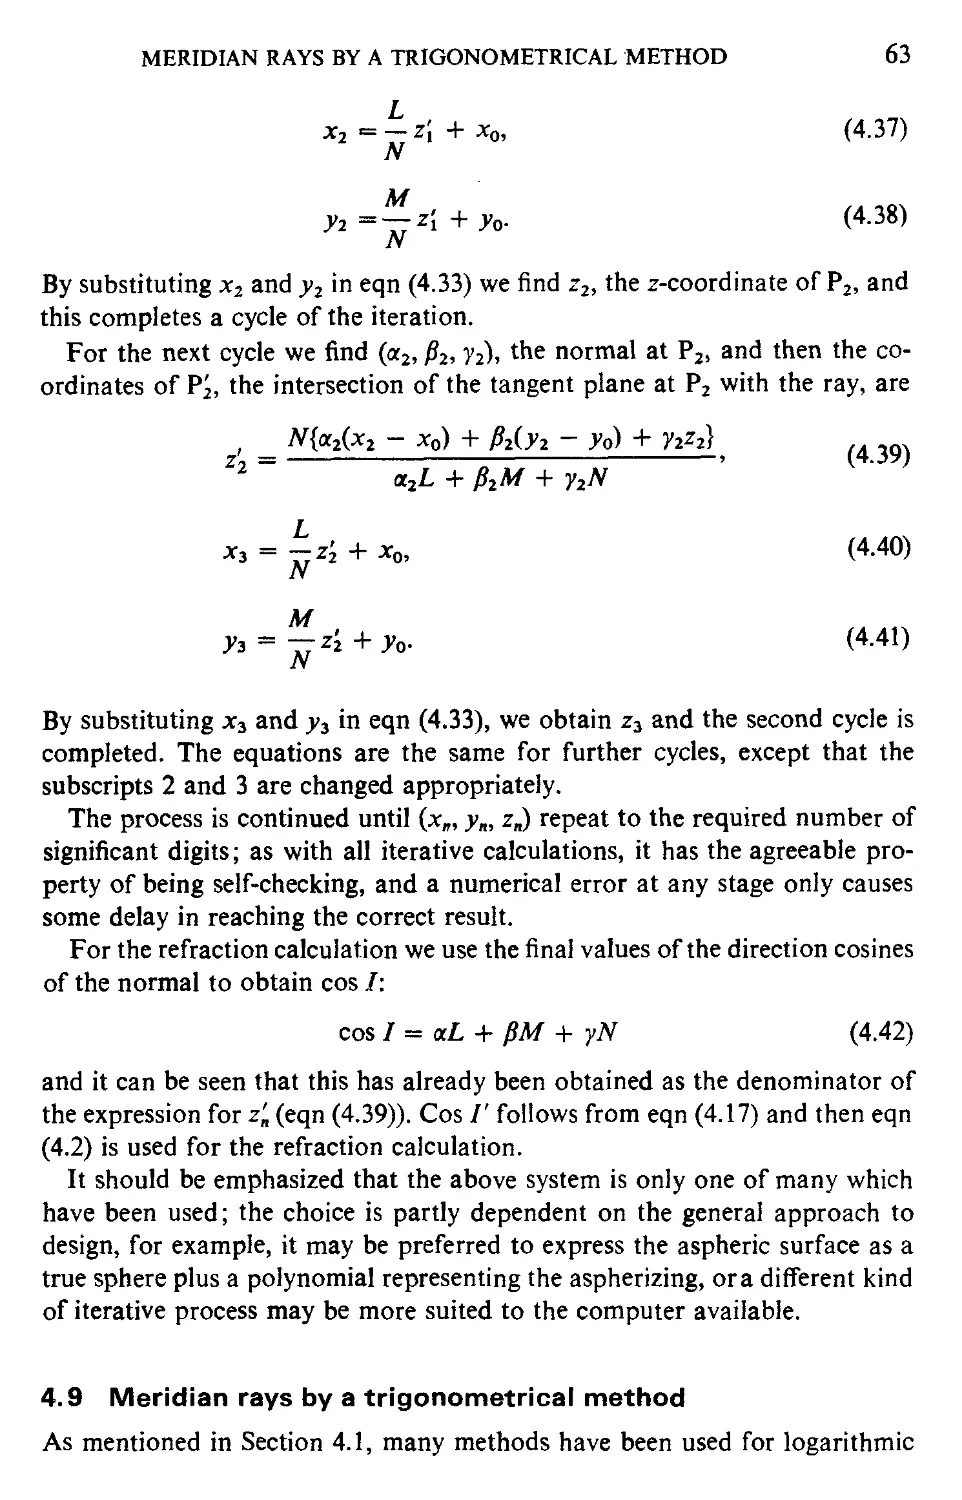 4.9 Meridian rays by a trigonometrical method